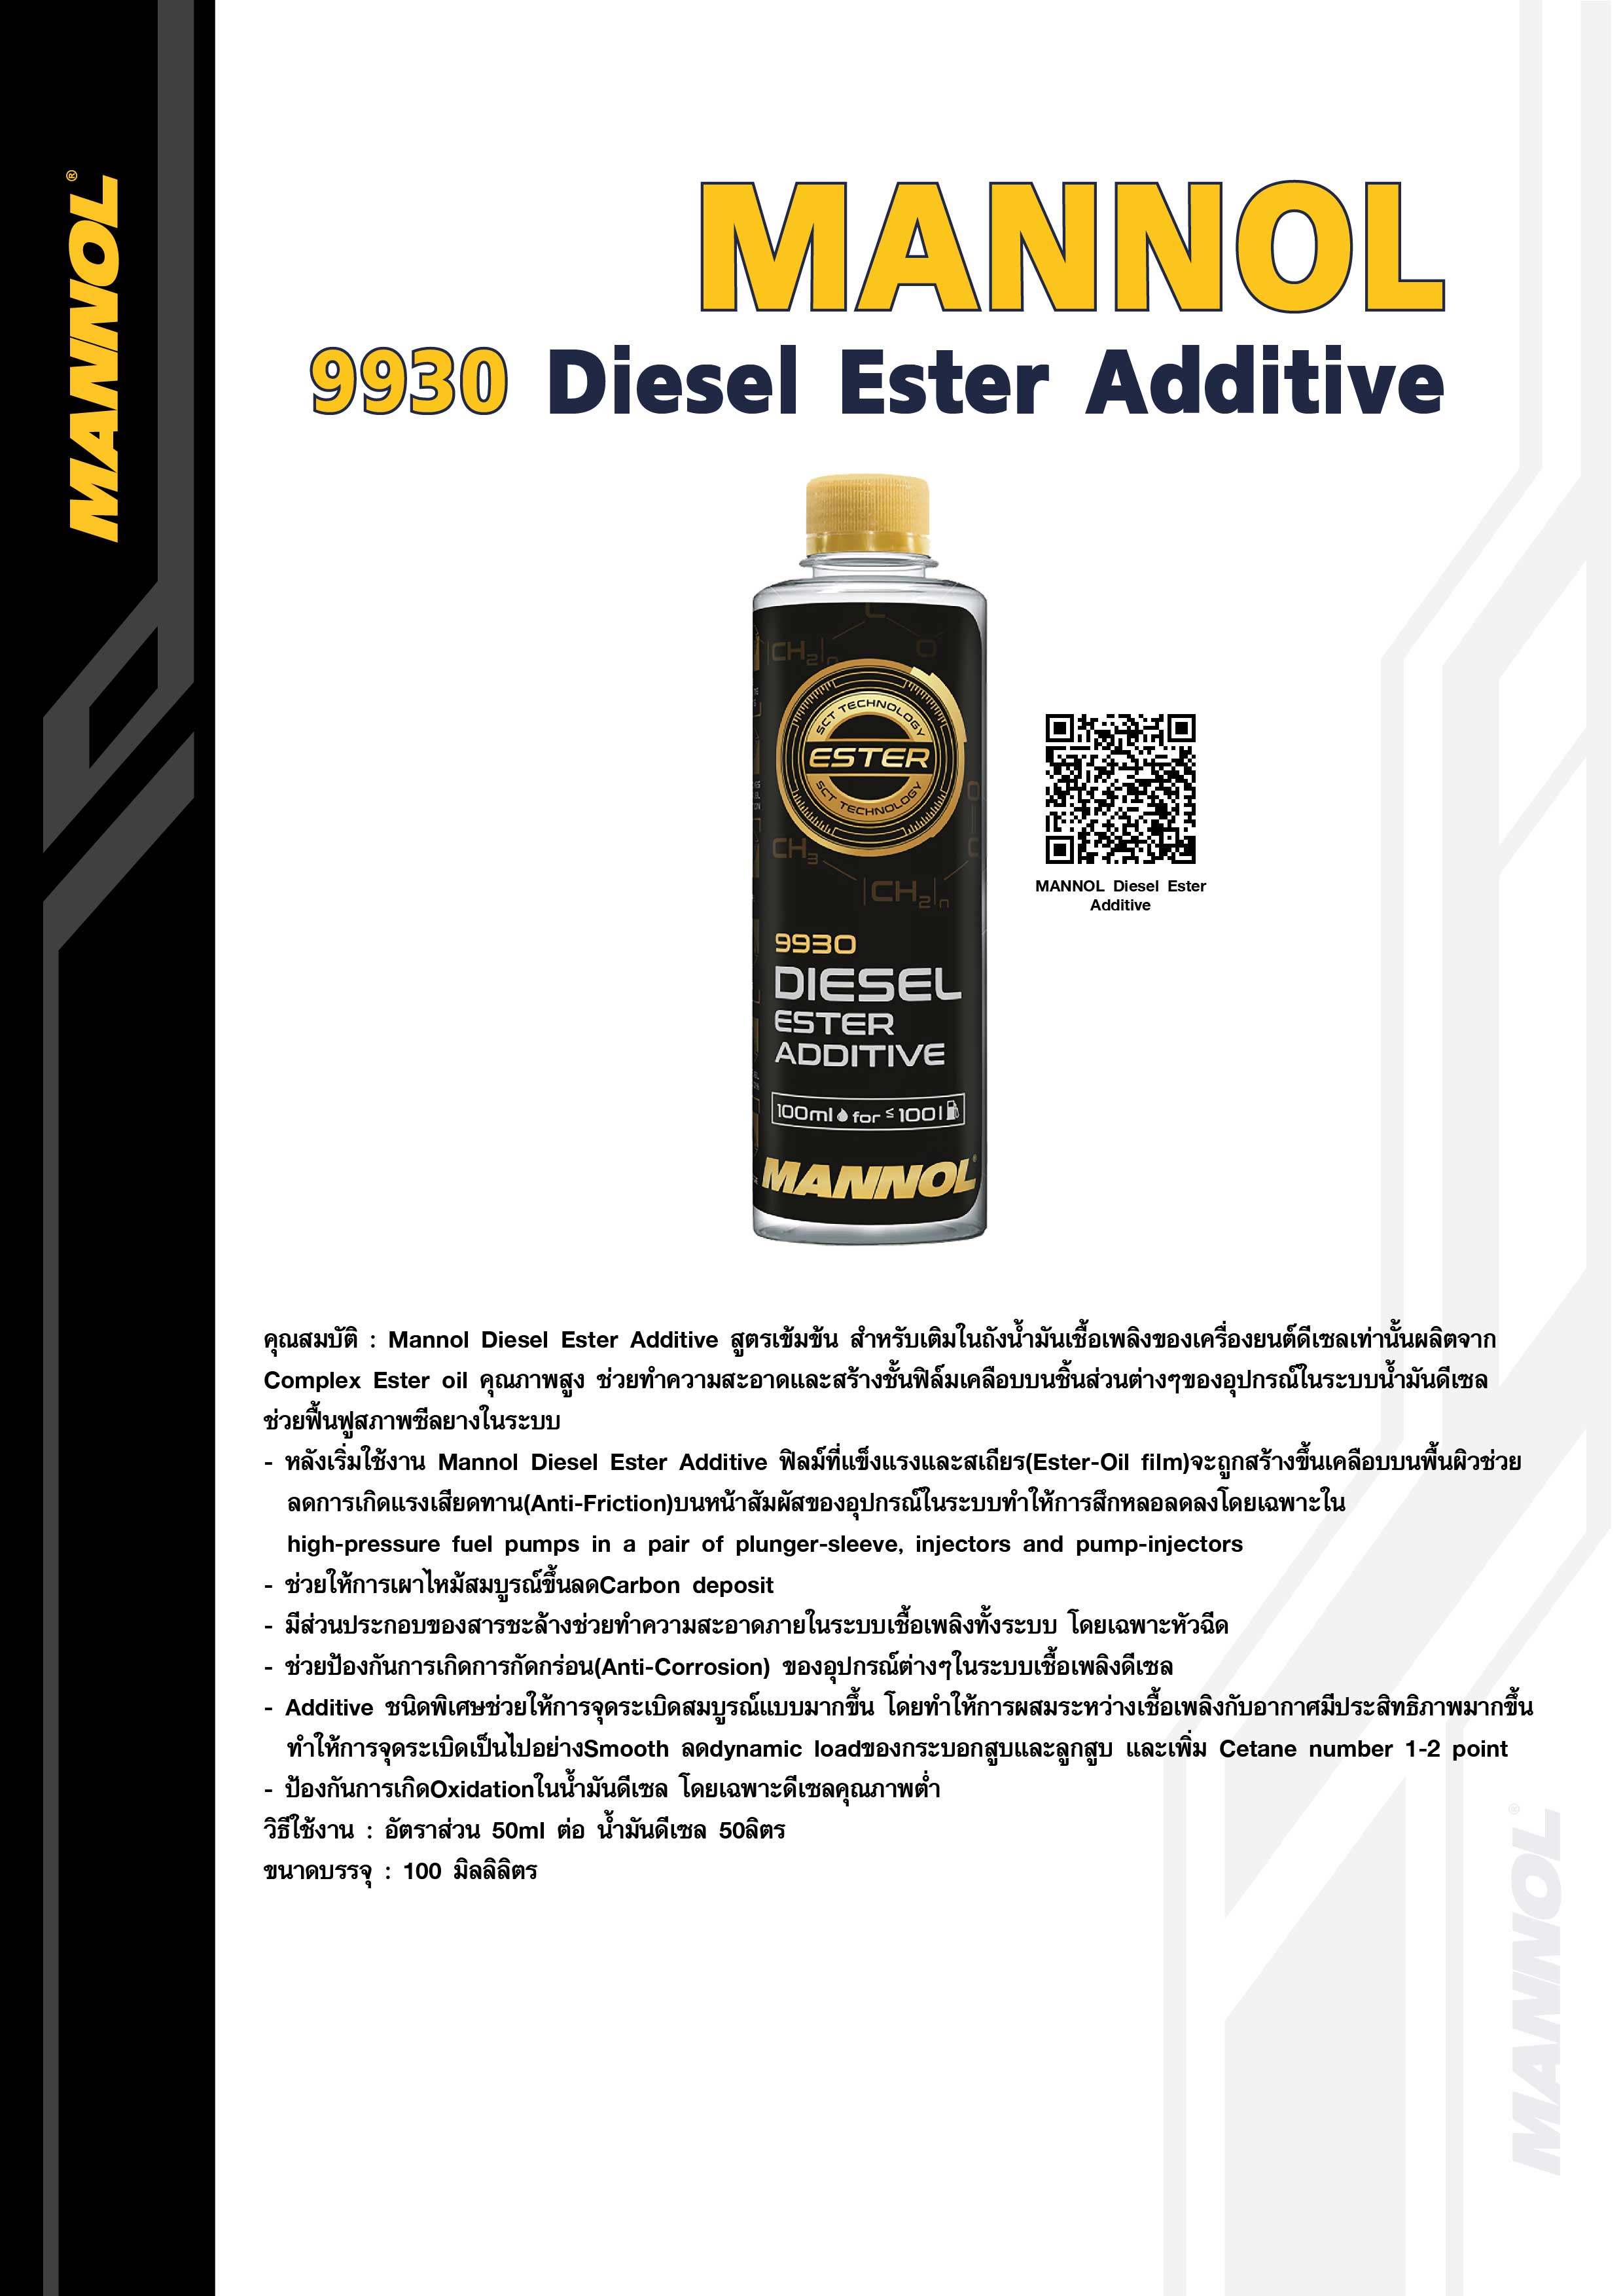 Mannol Diesel Ester Additive